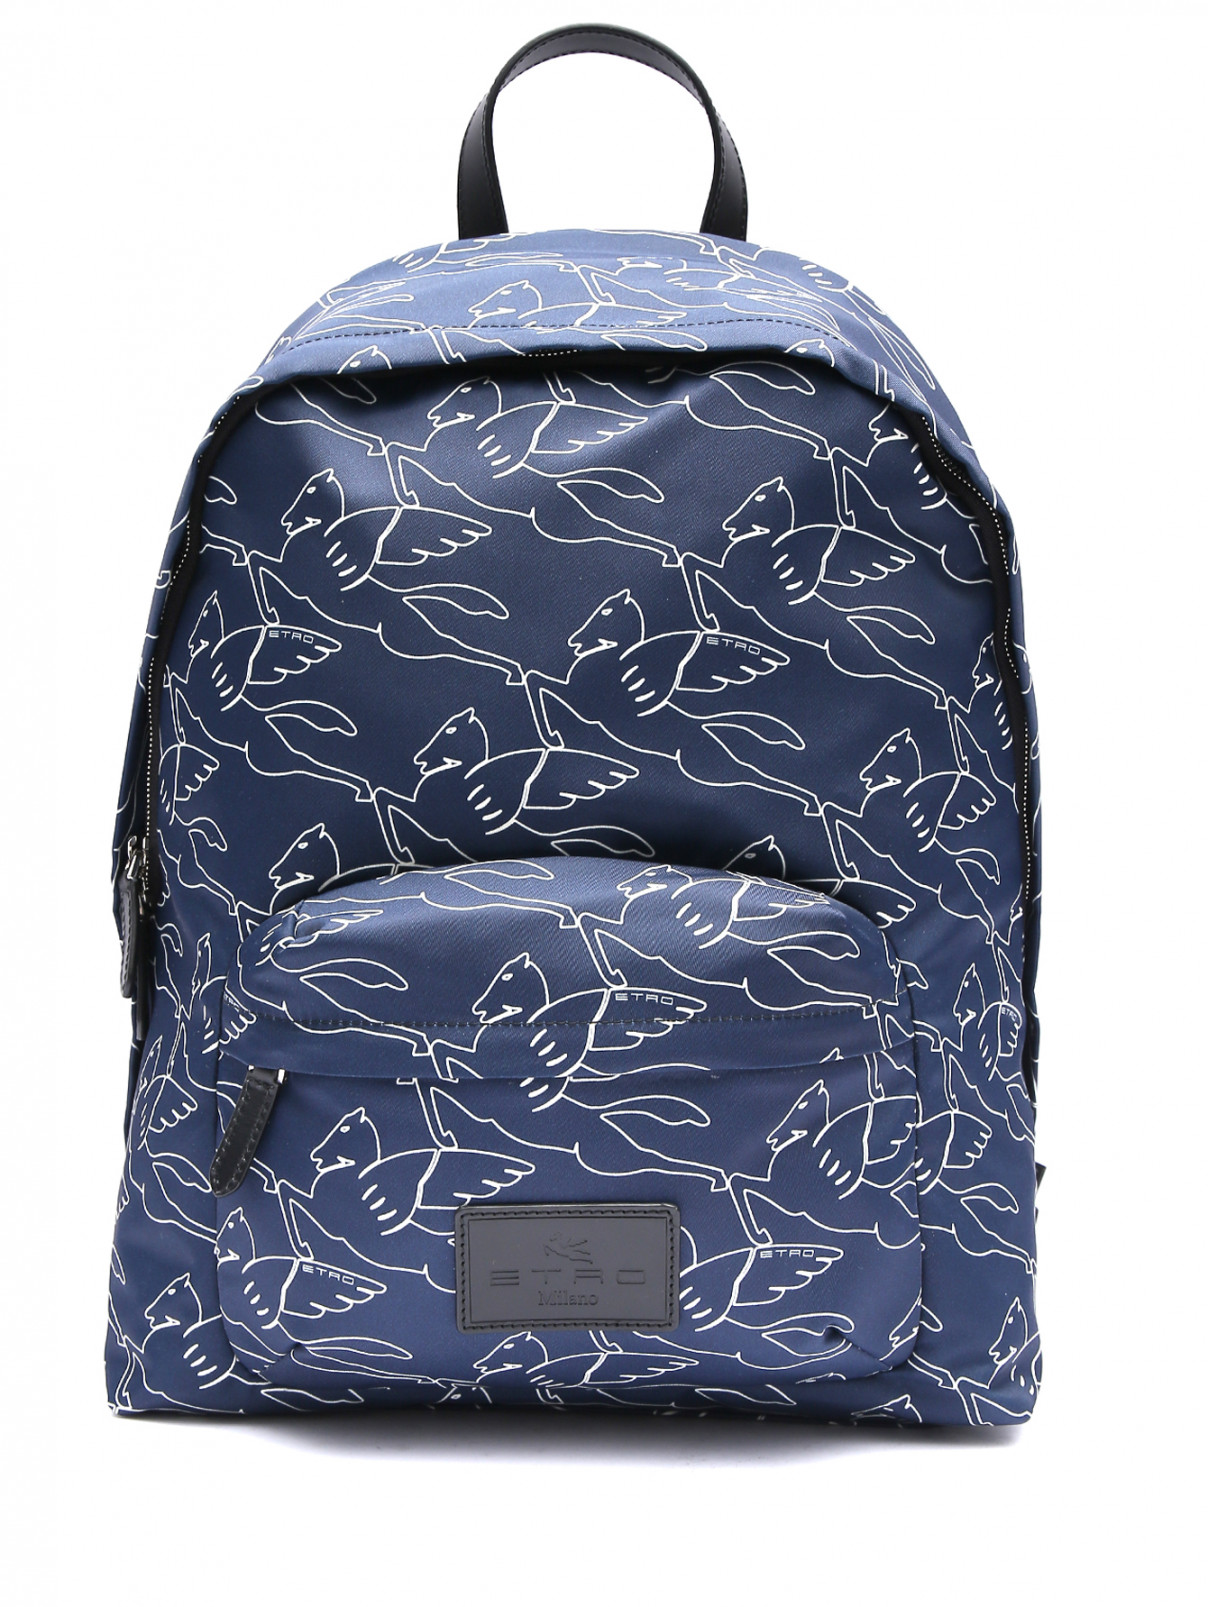 Рюкзак из текстиля с узором Etro  –  Общий вид  – Цвет:  Синий